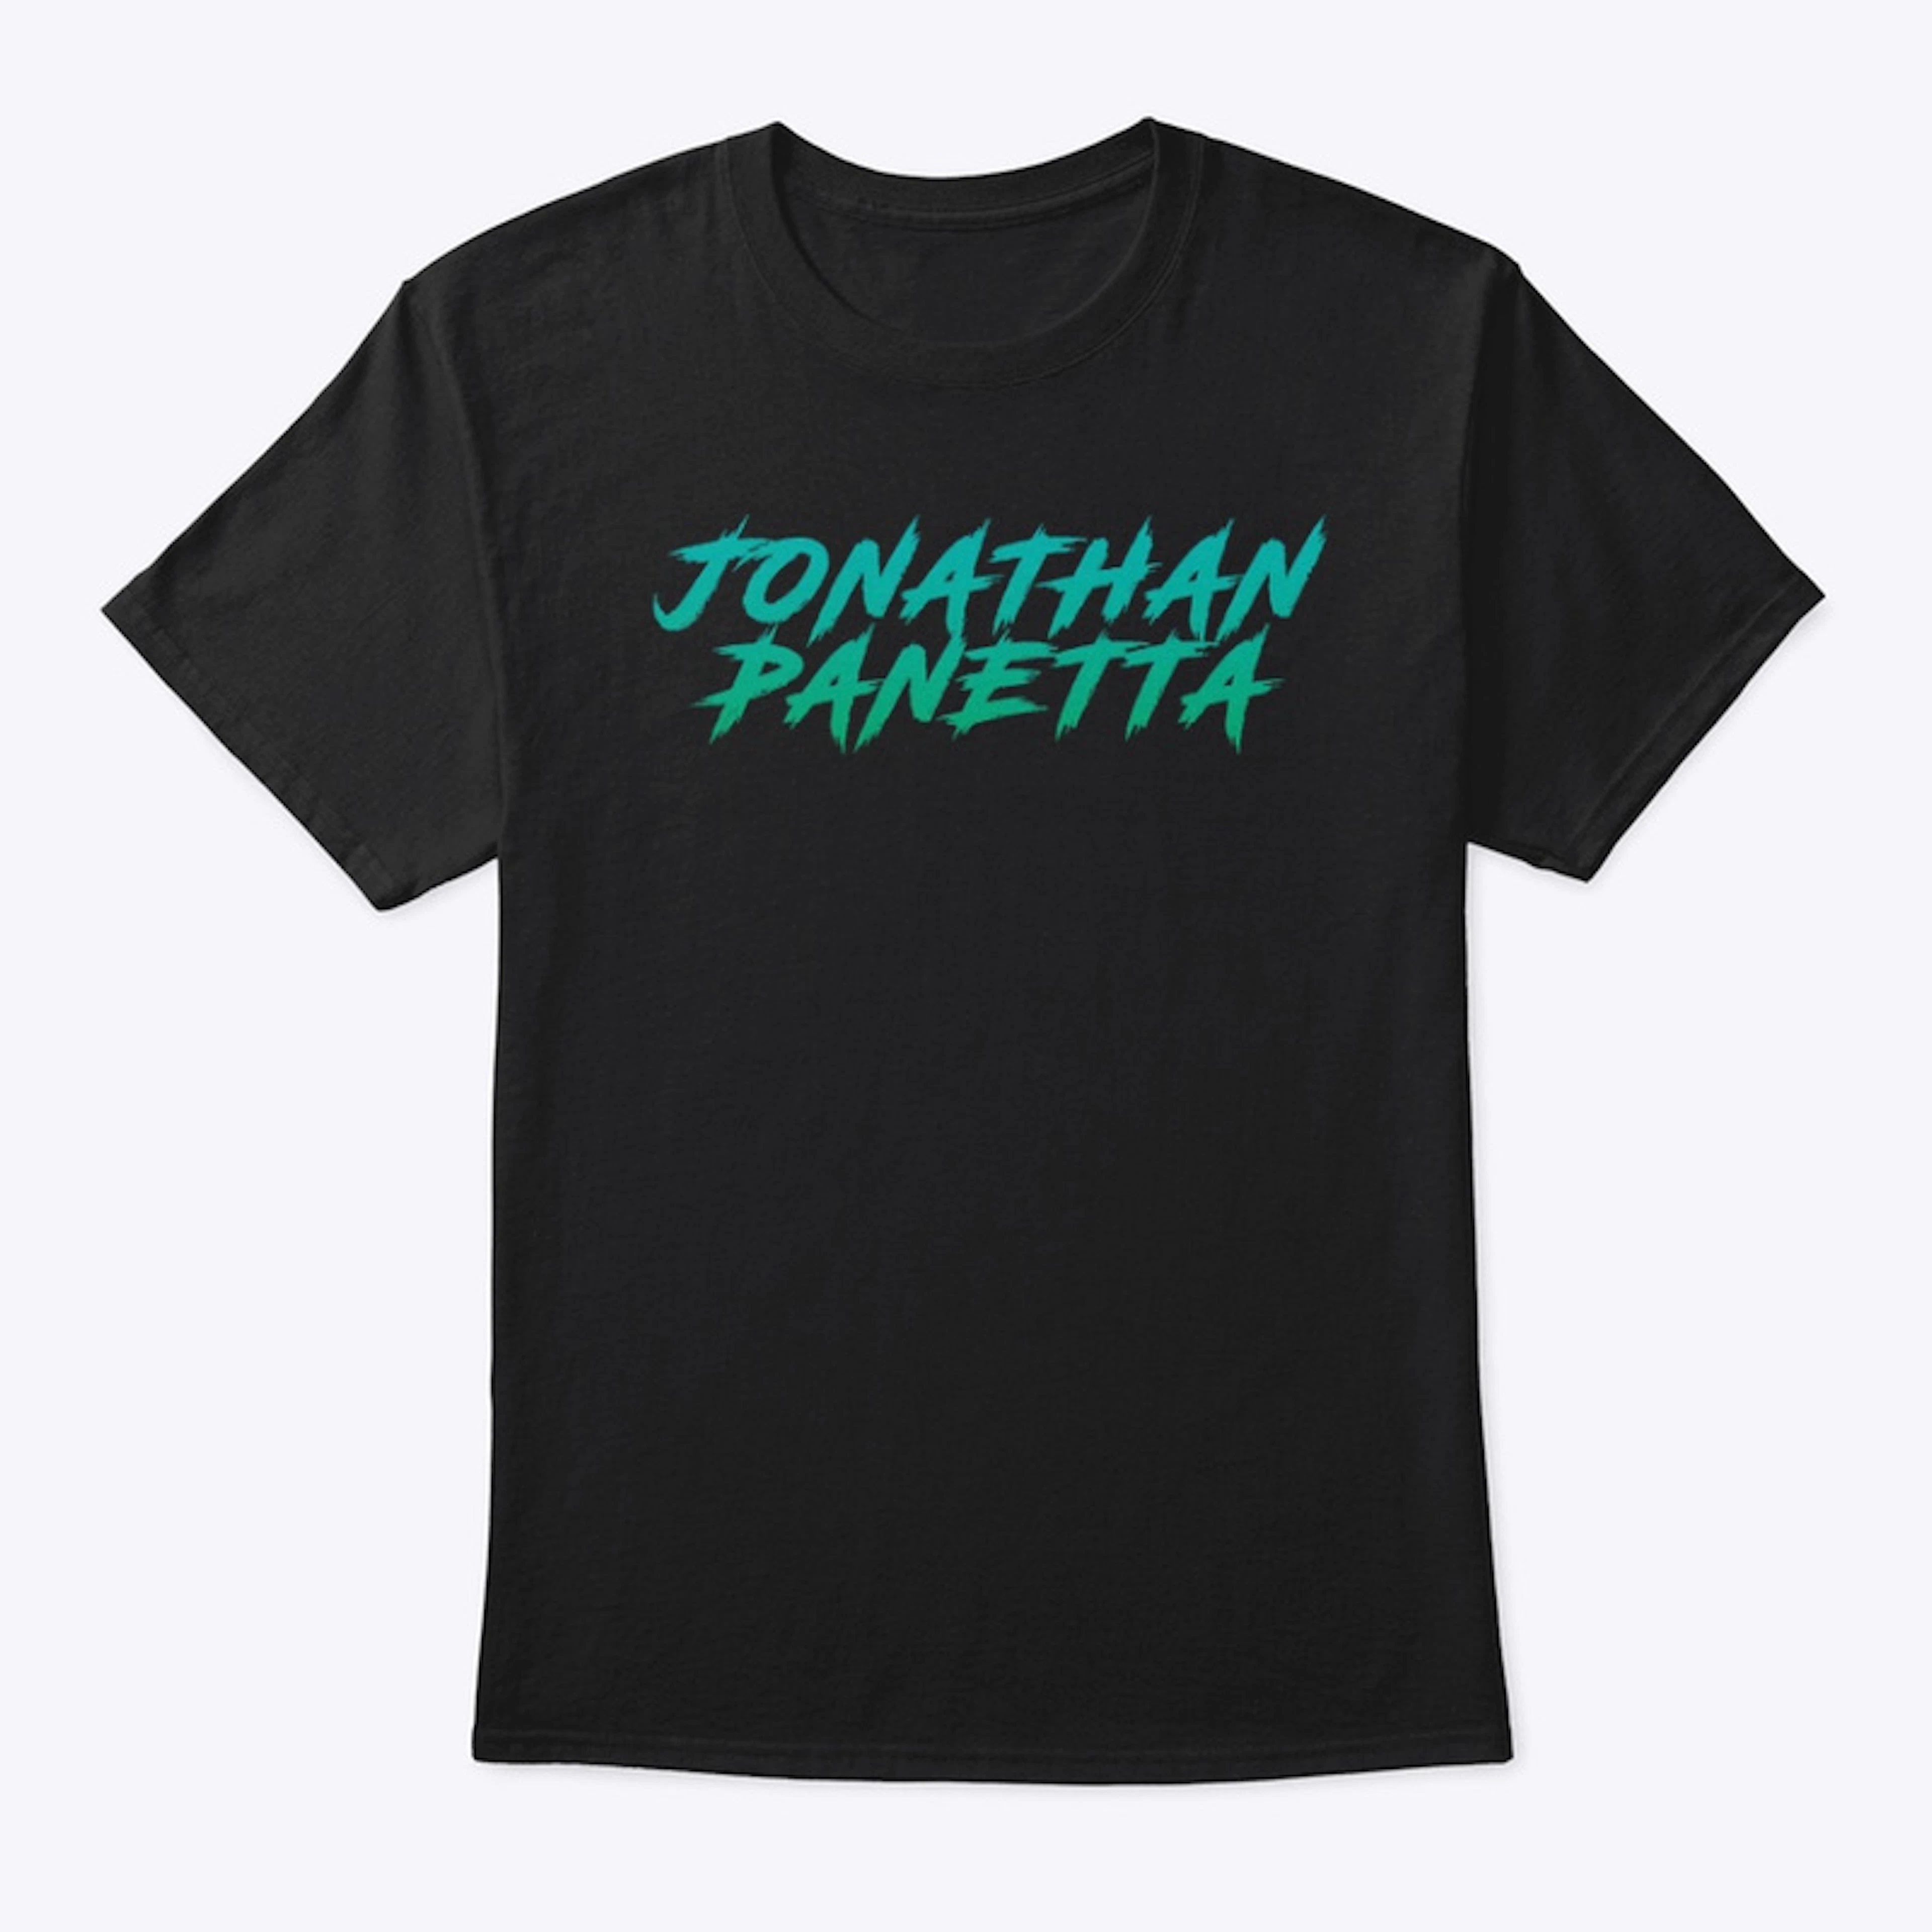 Jonathan Panetta Teal logo T Shirt